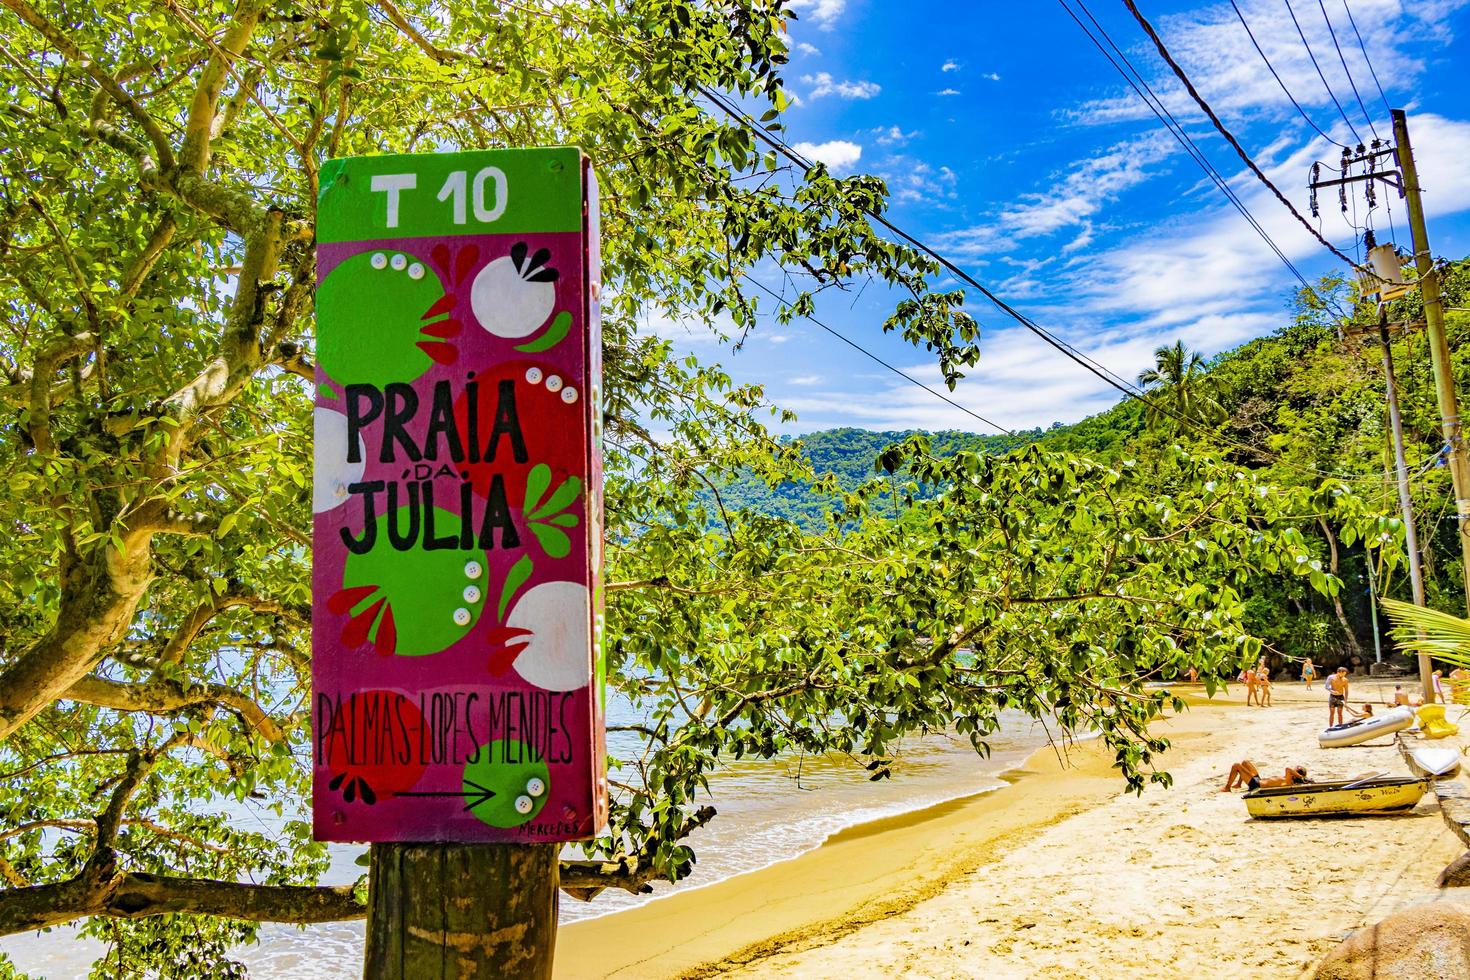 Praia da Julia, Brazil, Nov 23, 2020 - Welcome sign to the Praia da Julia Beach photo